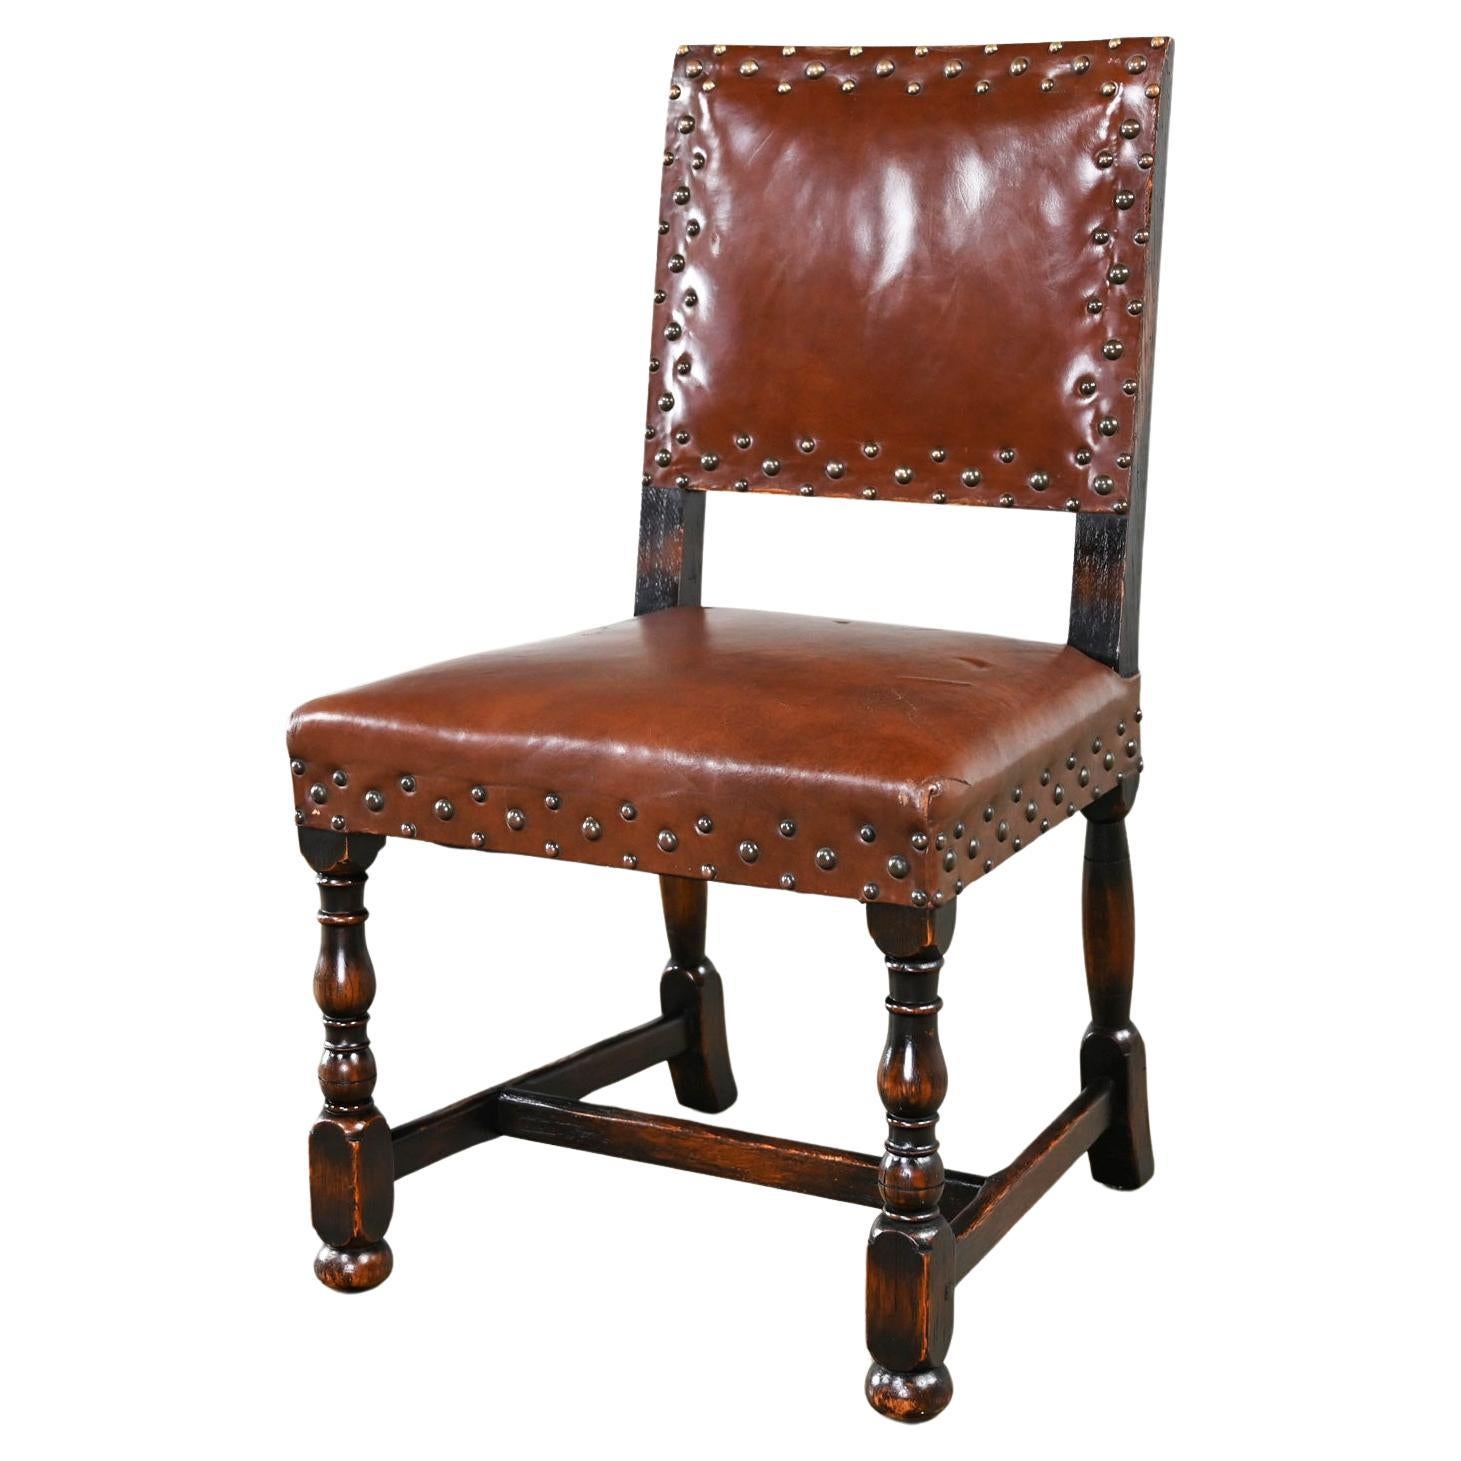 Spanish Revival Century Furniture Oak Side Chair Cognac Leather Nailhead Details For Sale